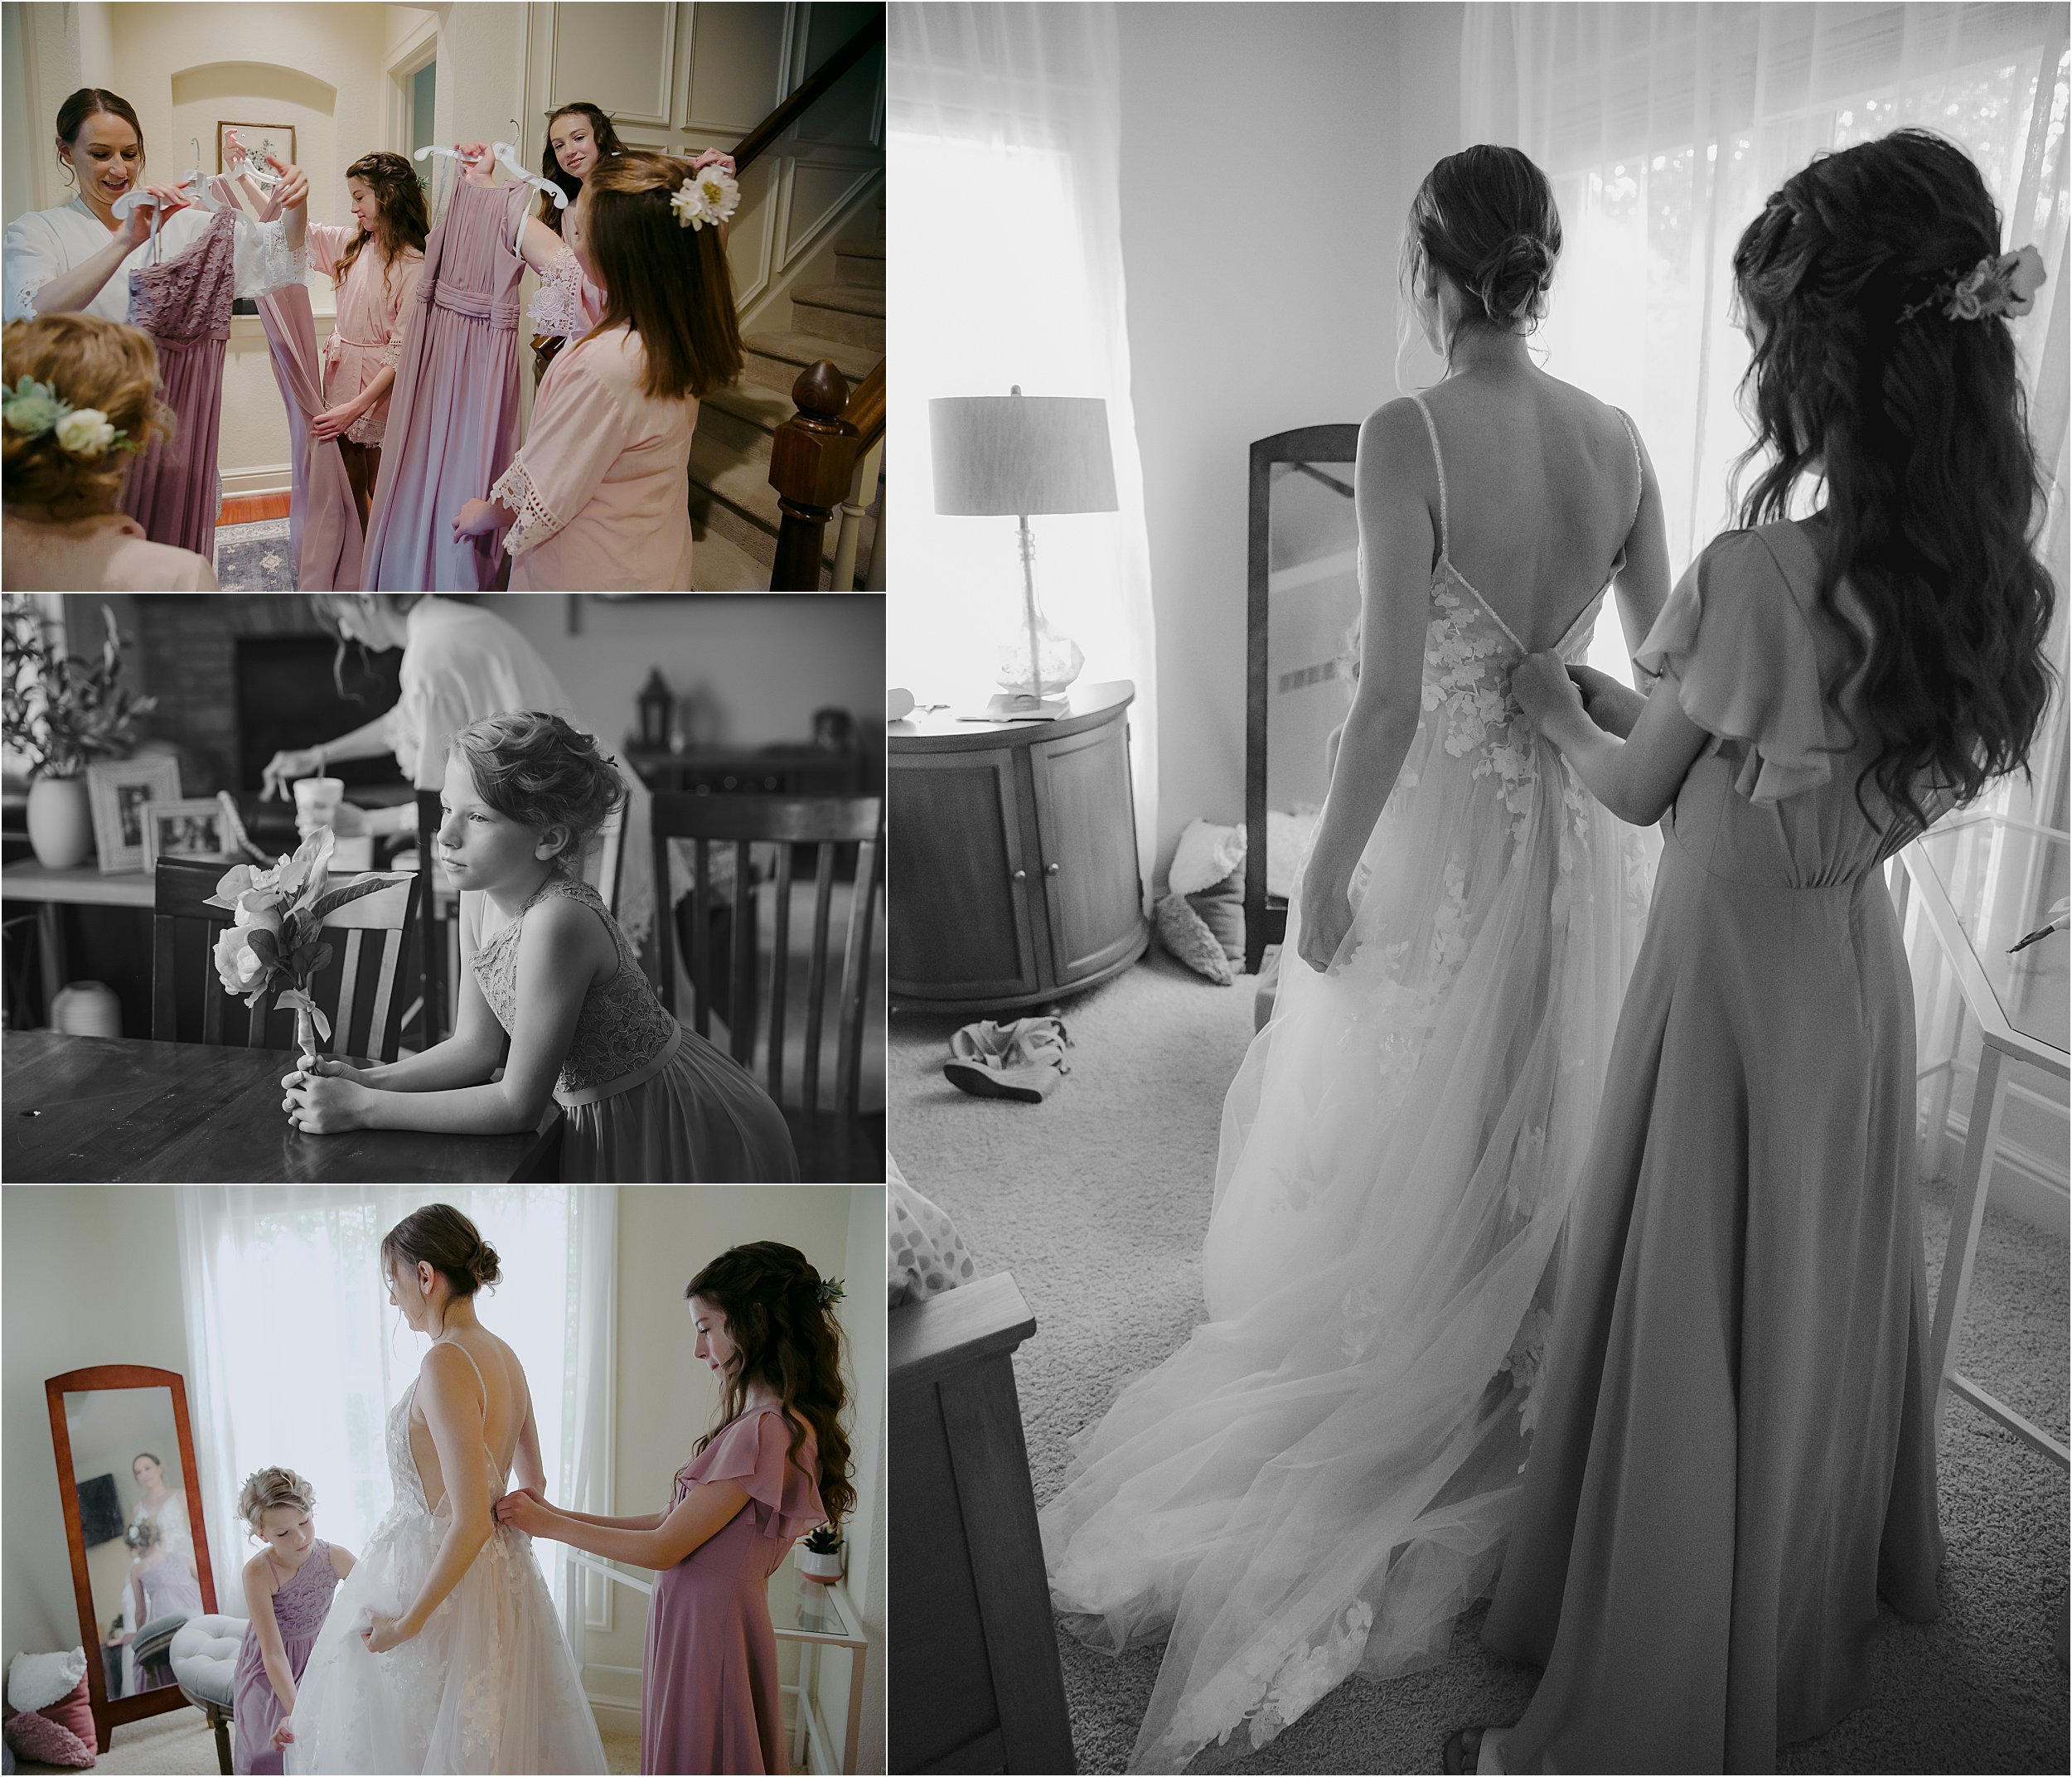 03-daughters-helping-mom-put-on-wedding-dress.JPG